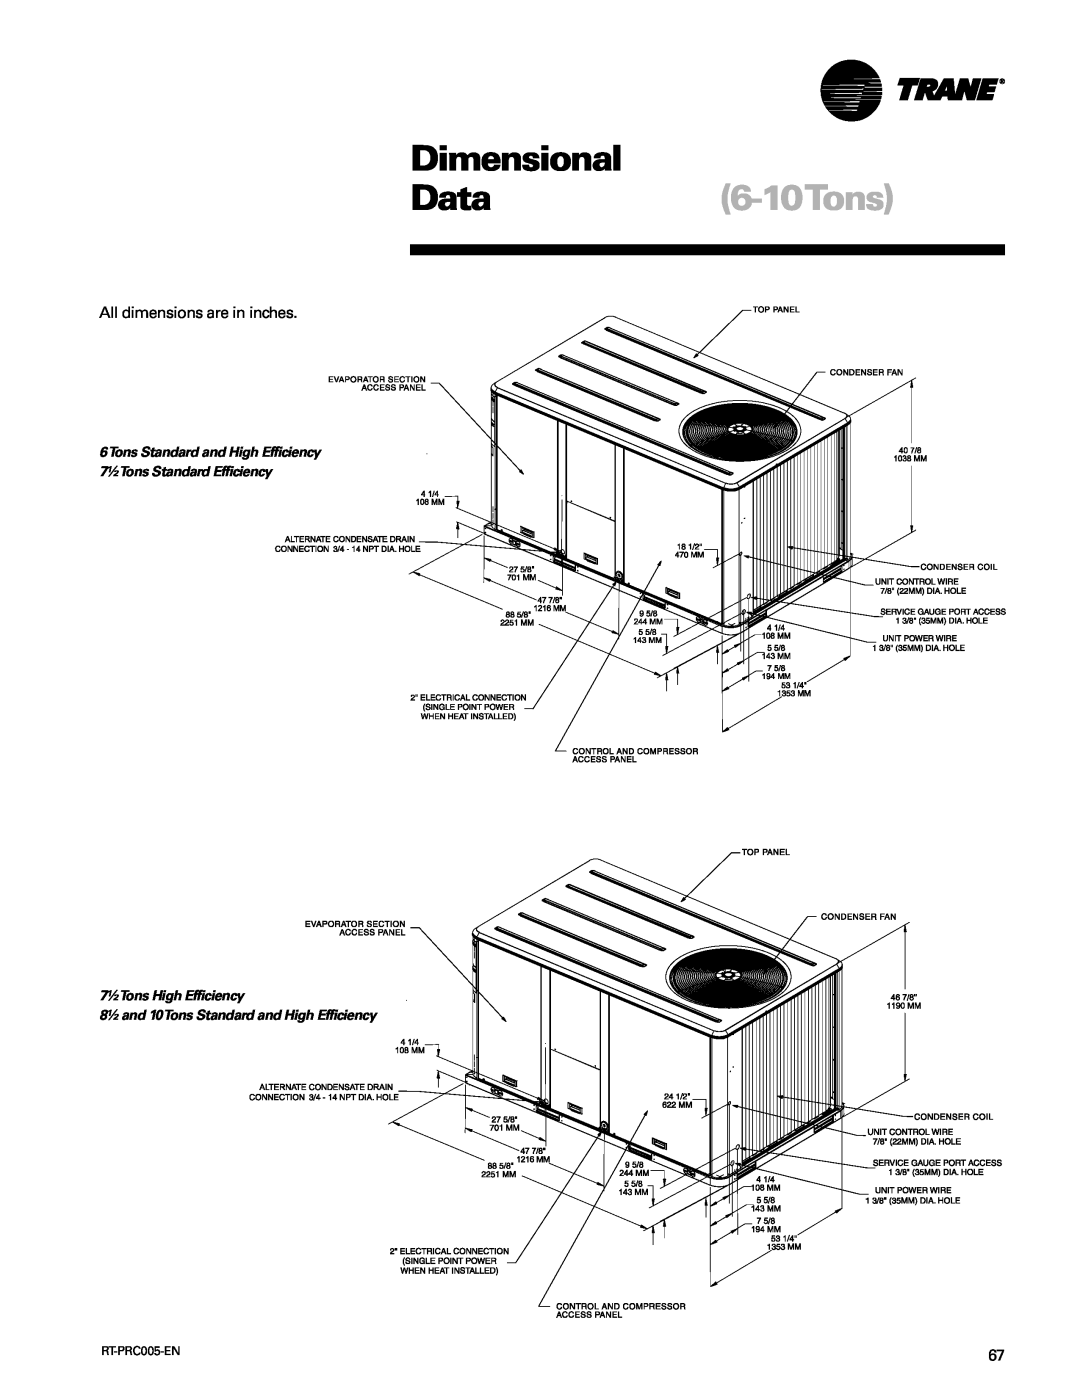 Trane RT-PRC005 Data6-10Tons, Dimensional, 6Tons Standard and High Efficiency, 8½ and 10Tons Standard and High Efficiency 